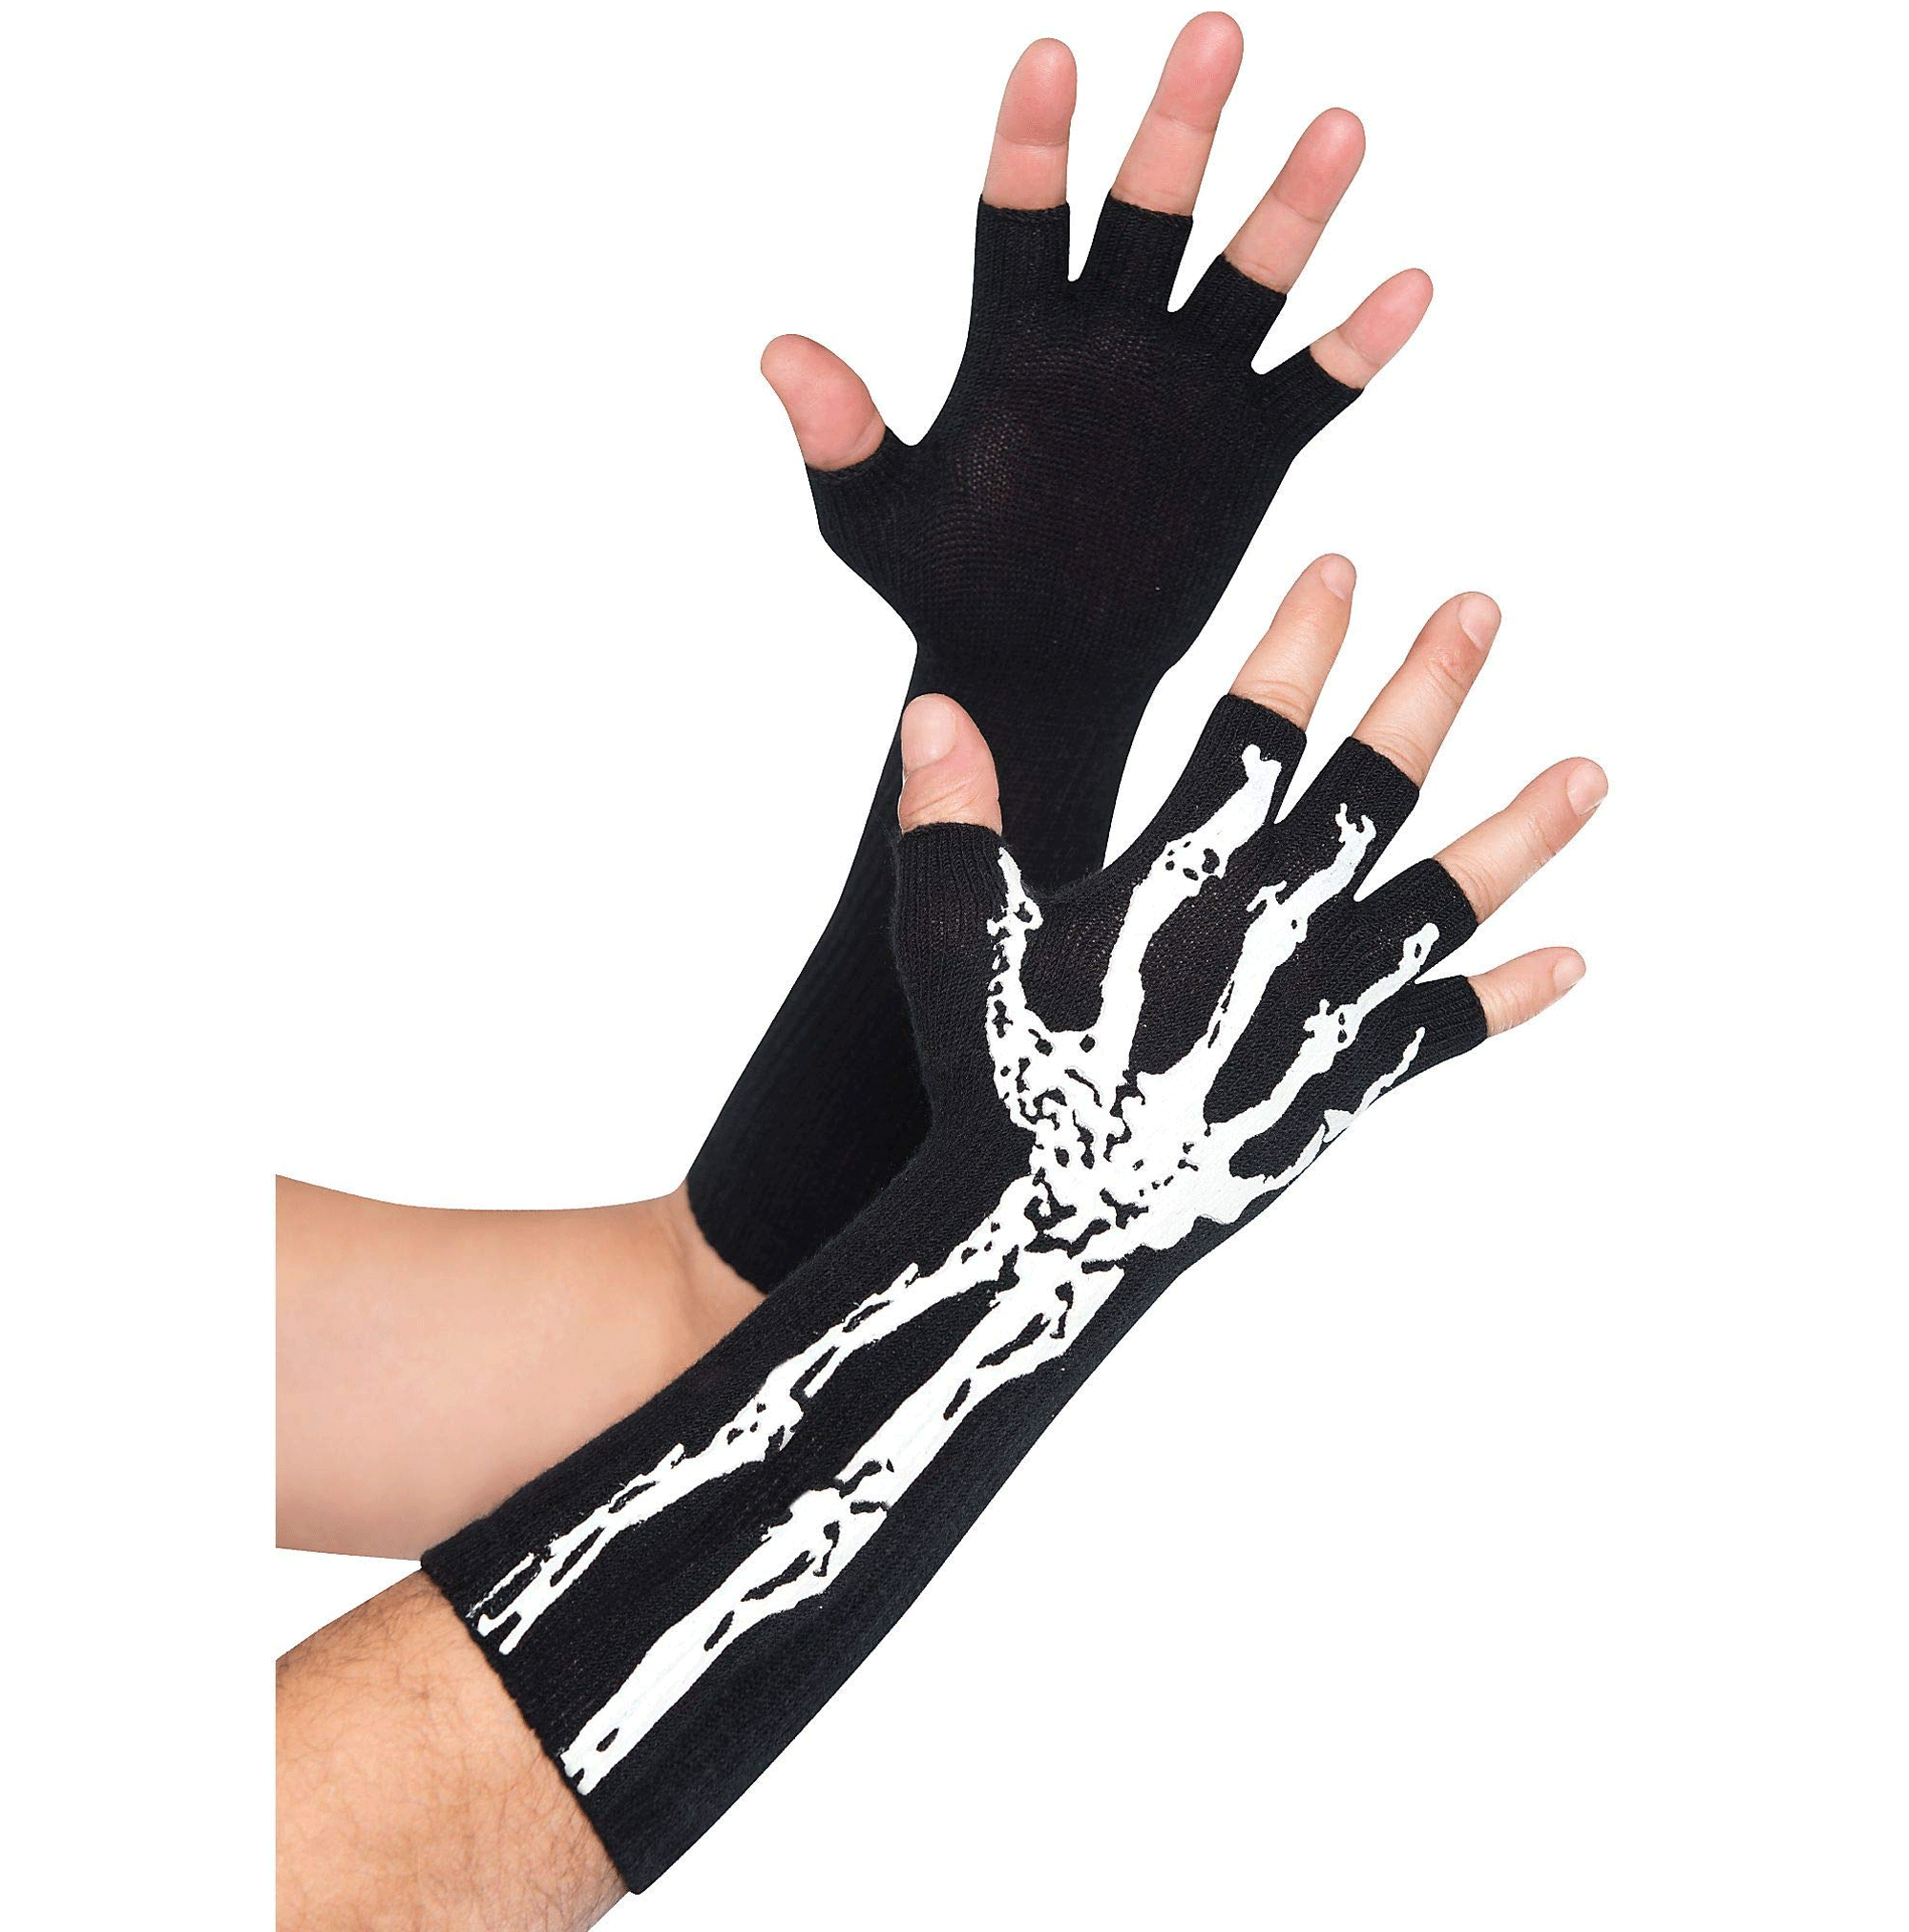 Adult Glow In Dark Fingerless Gloves